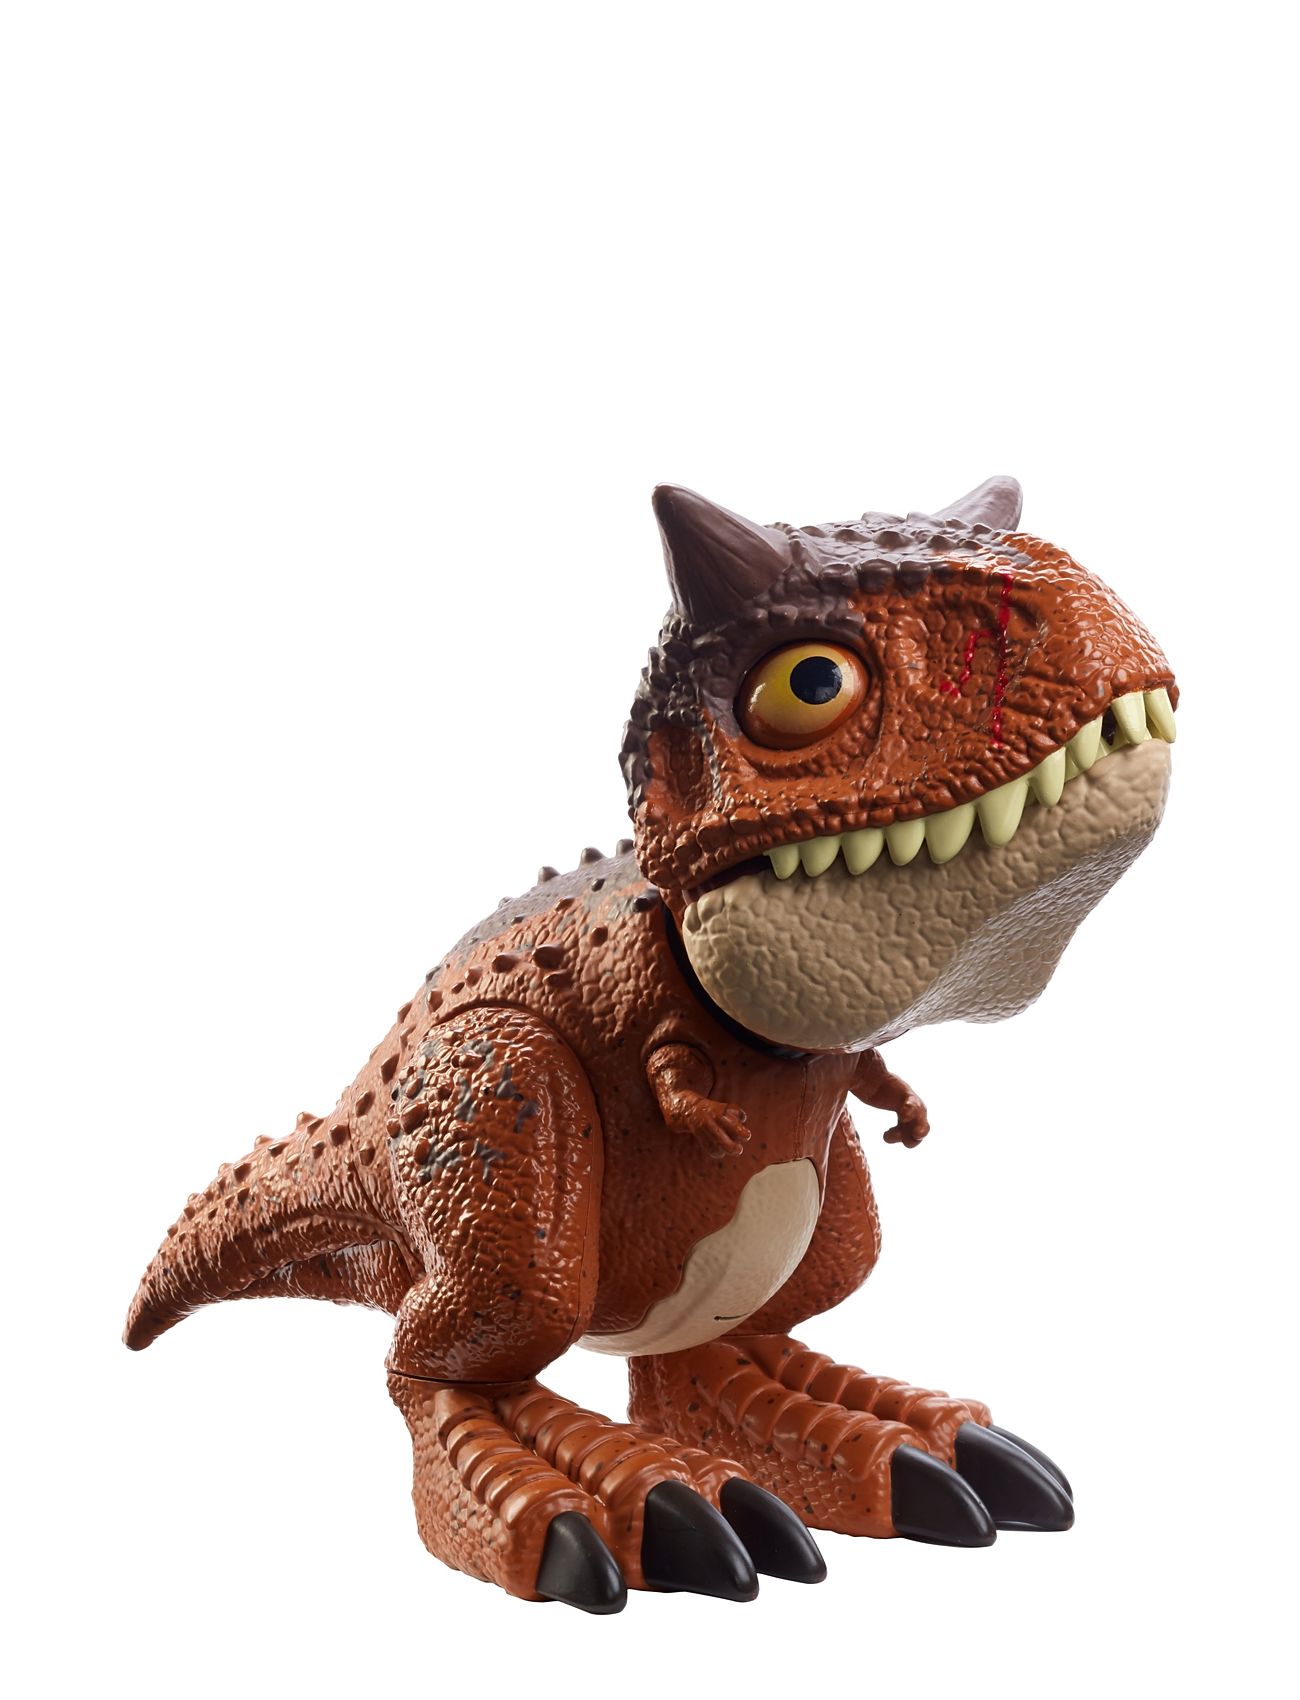 Jurassic World Legetøjsfigur Til Børn Toys Playsets & Action Figures Animals Multi/patterned Jurassic World